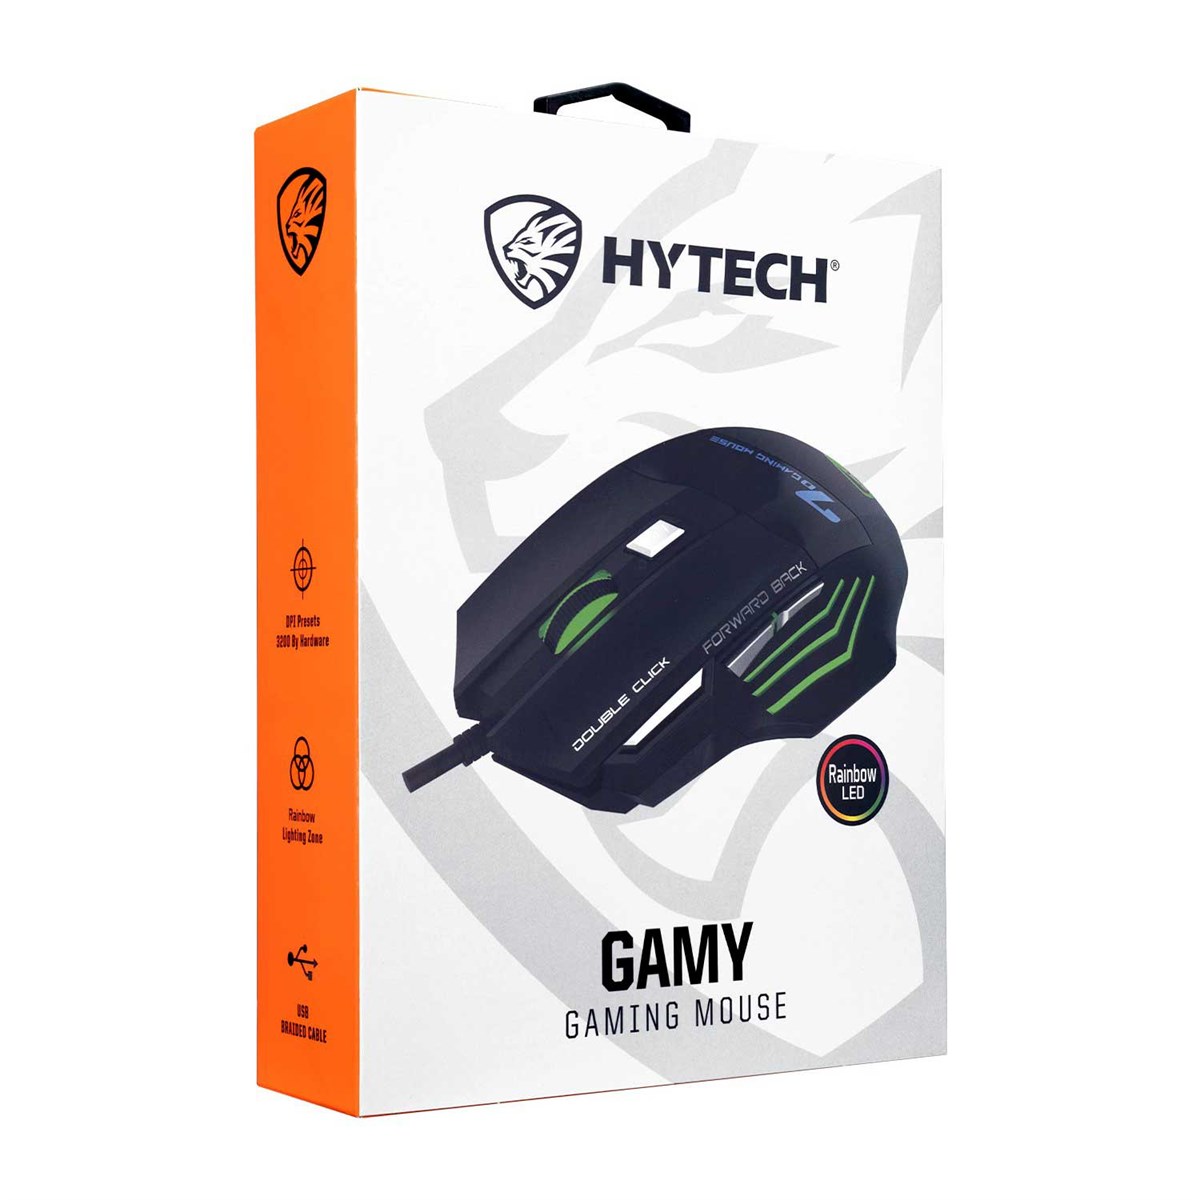 Hytech Gamy Hy-X7 Rainbow LED Oyuncu Mouse